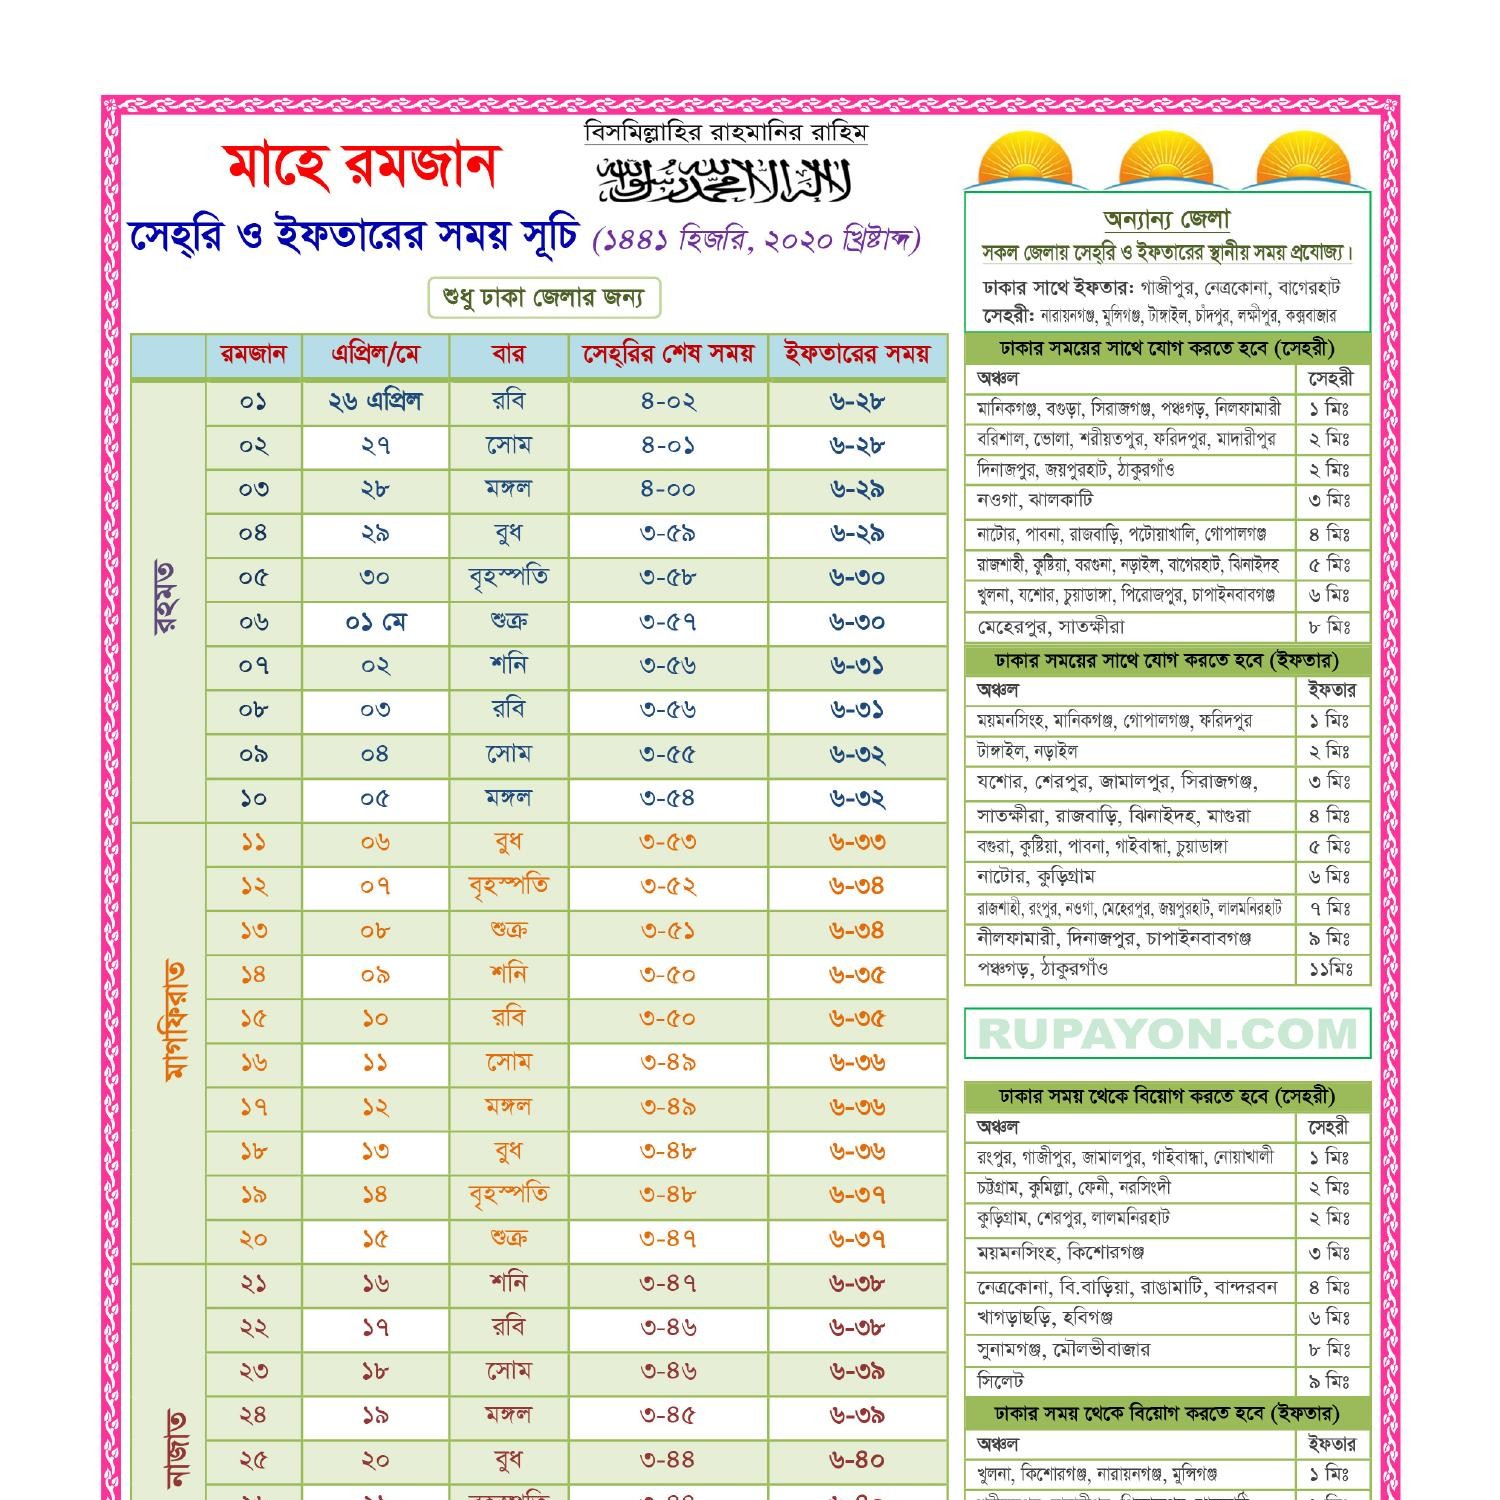 ramadan-calendar-2020-bangladesh